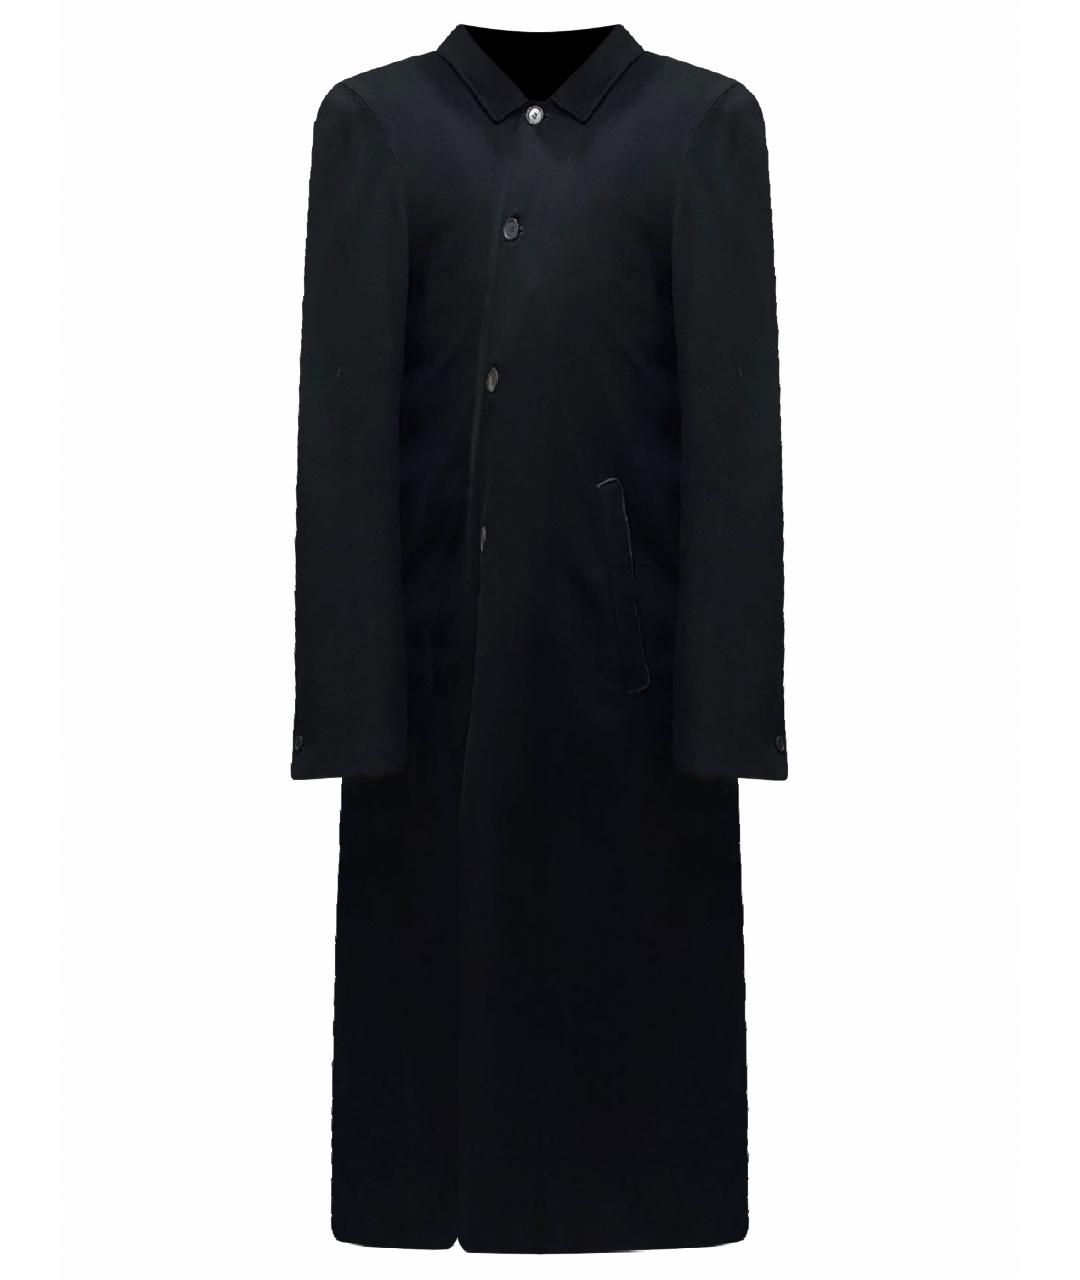 UOMO COLLEZIONI Черное шерстяное пальто, фото 1